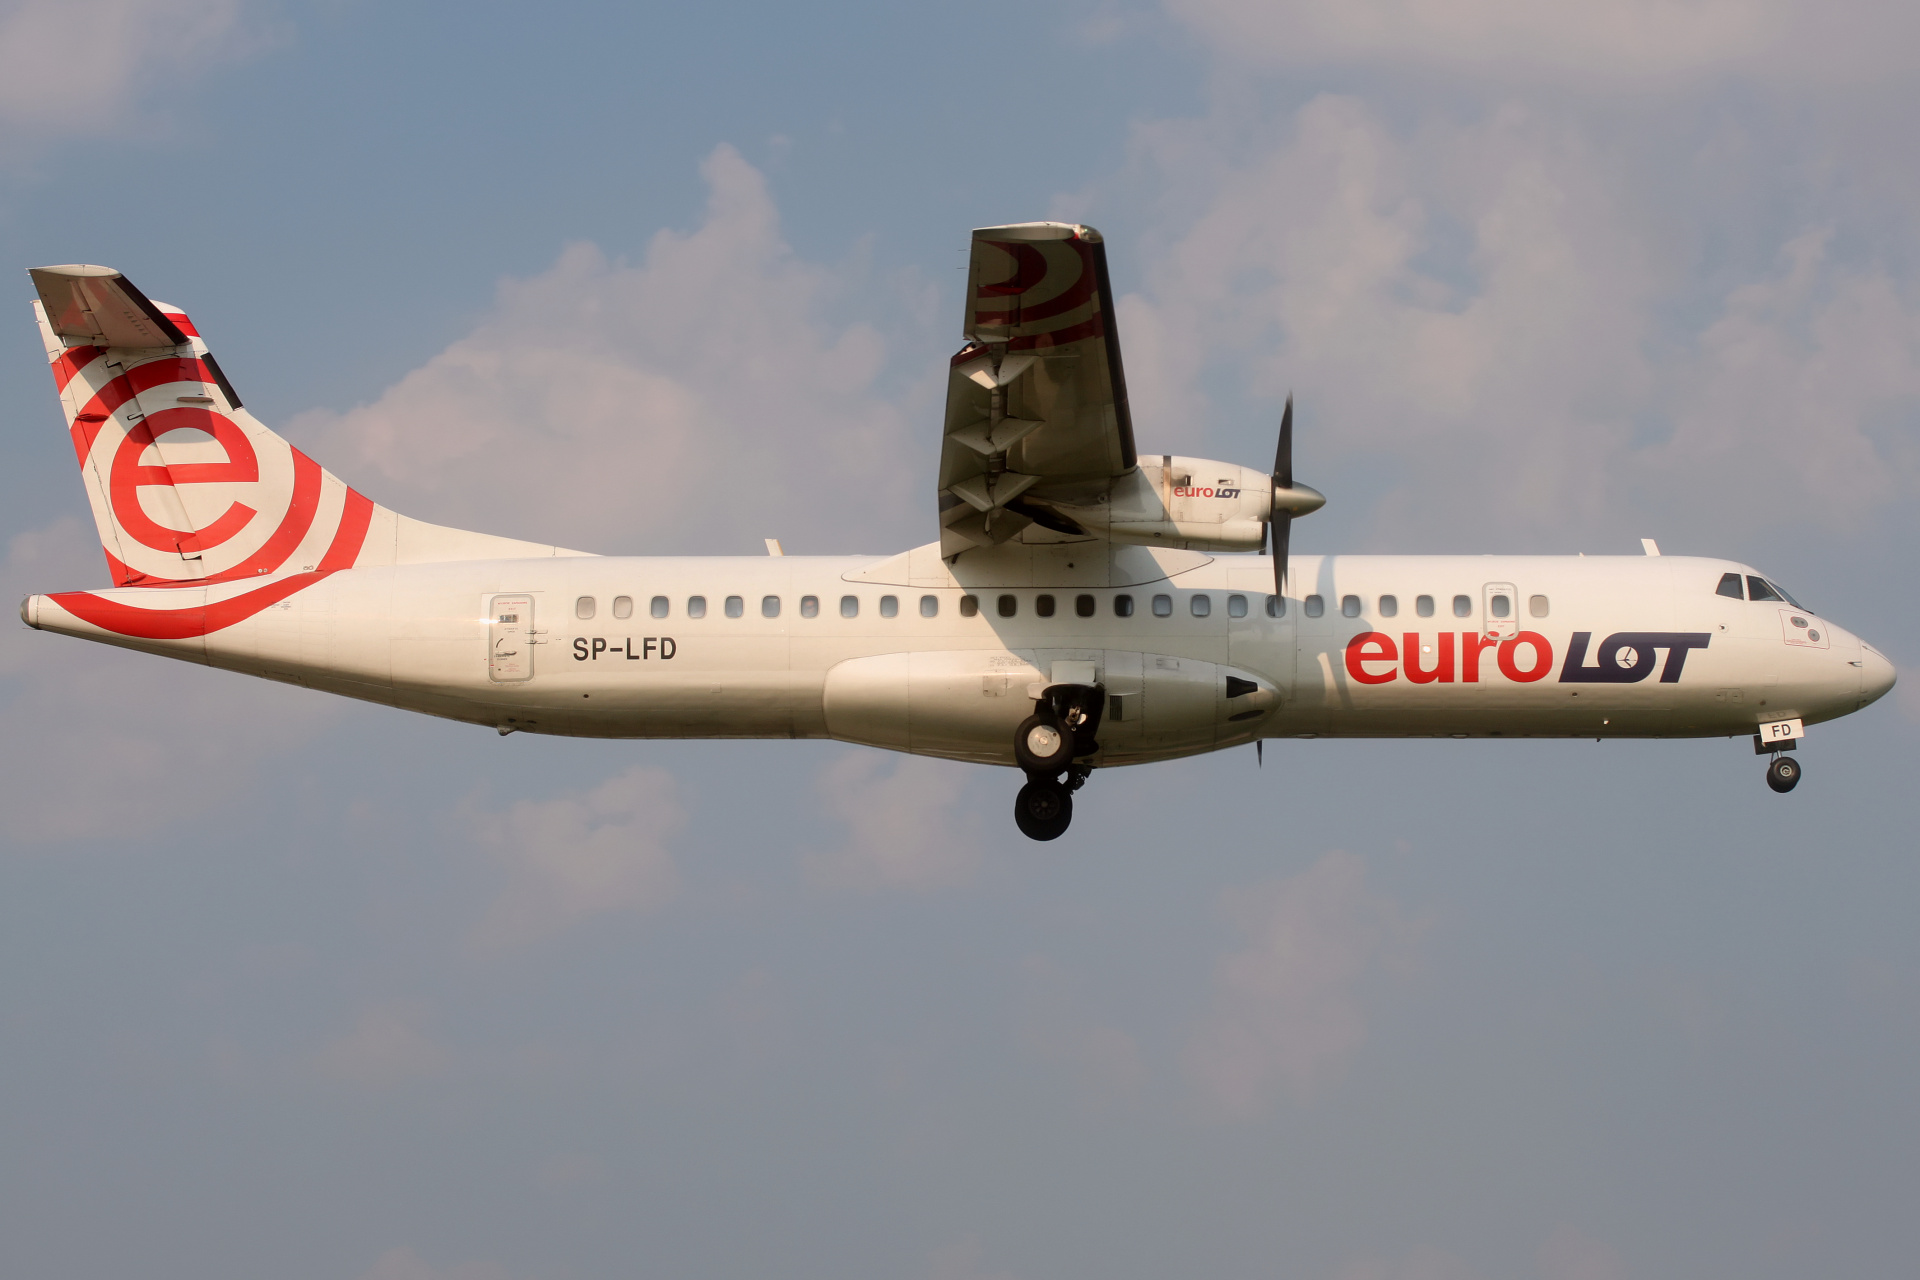 SP-LFD (Aircraft » EPWA Spotting » ATR 72 » EuroLOT)